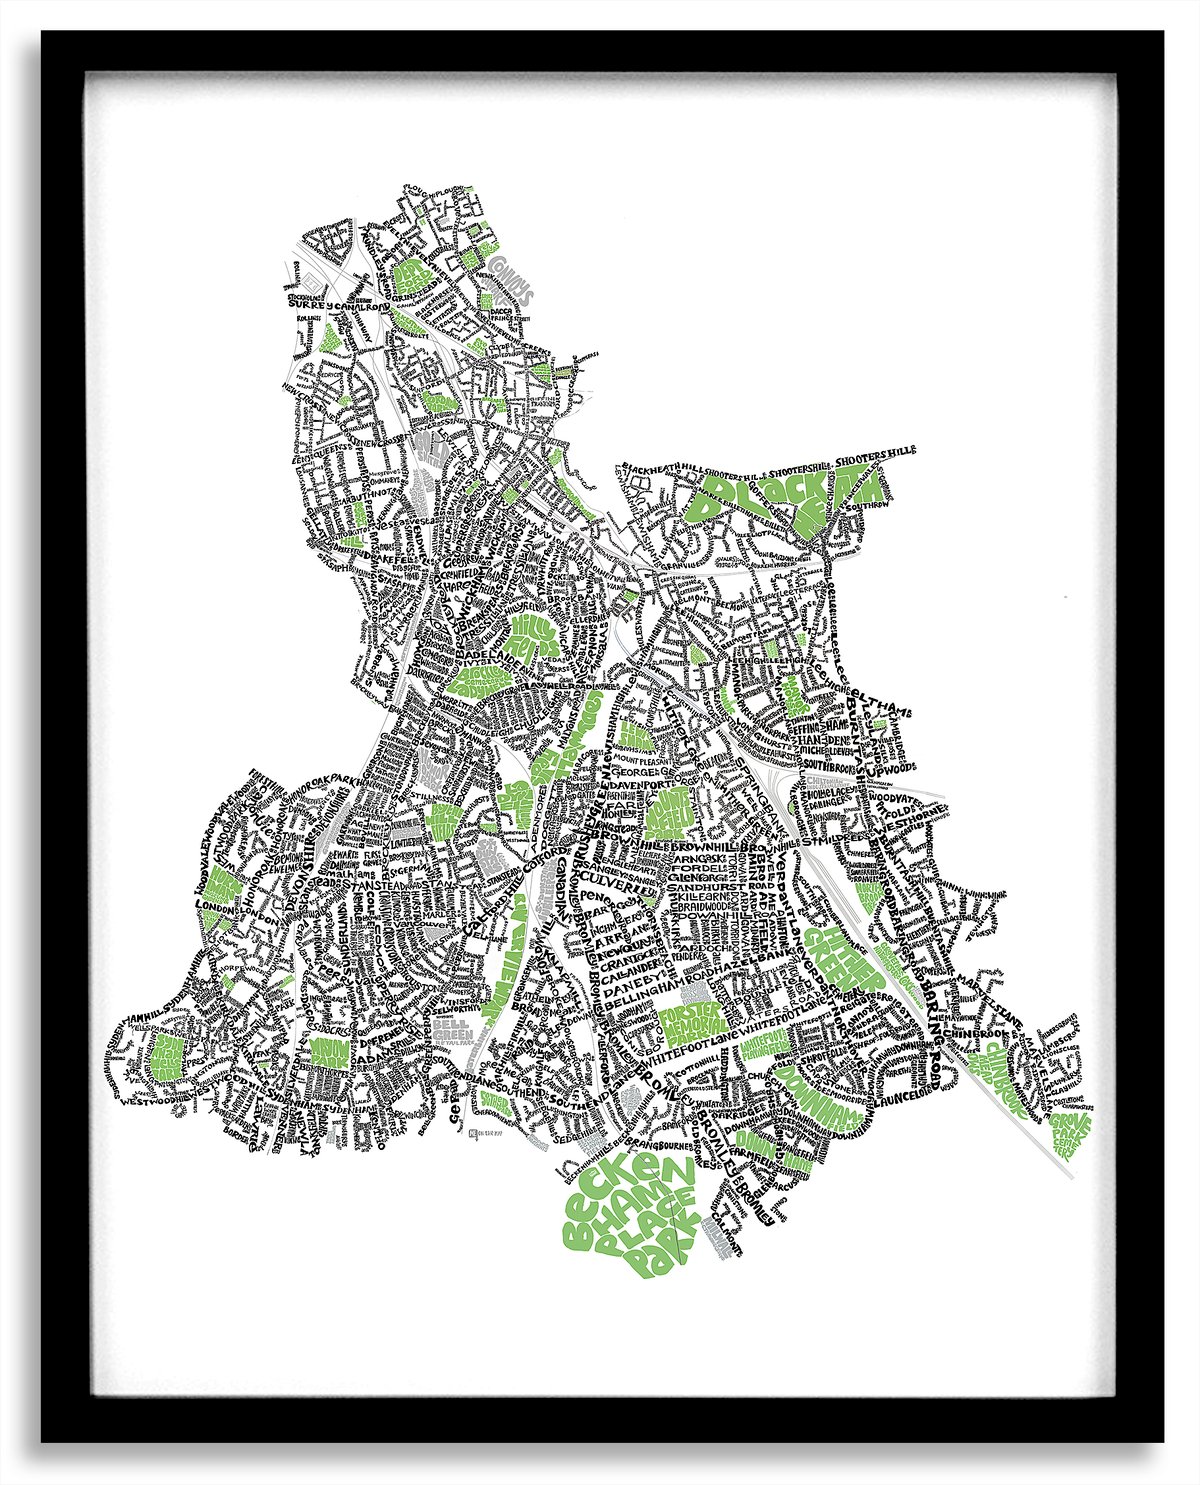 Image of Lewisham - London Borough Typographic Street Map 